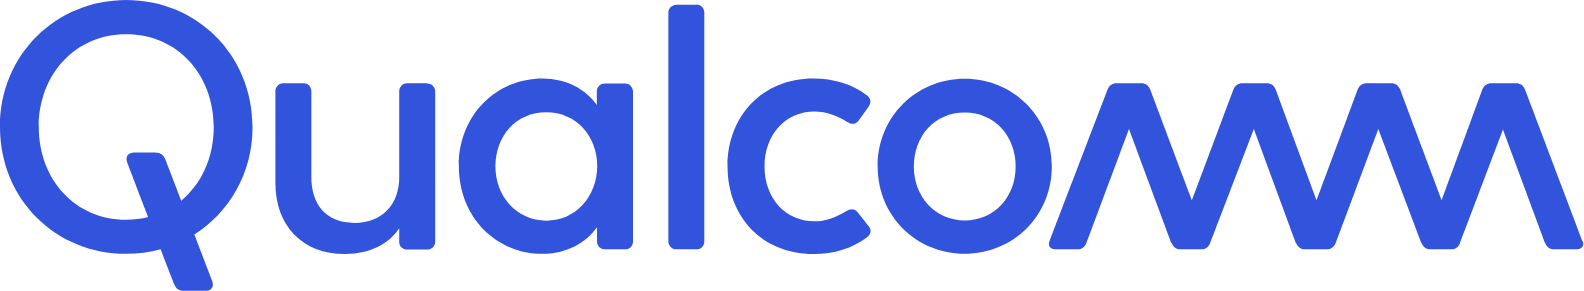 QUALCOMM logo large (transparent PNG)